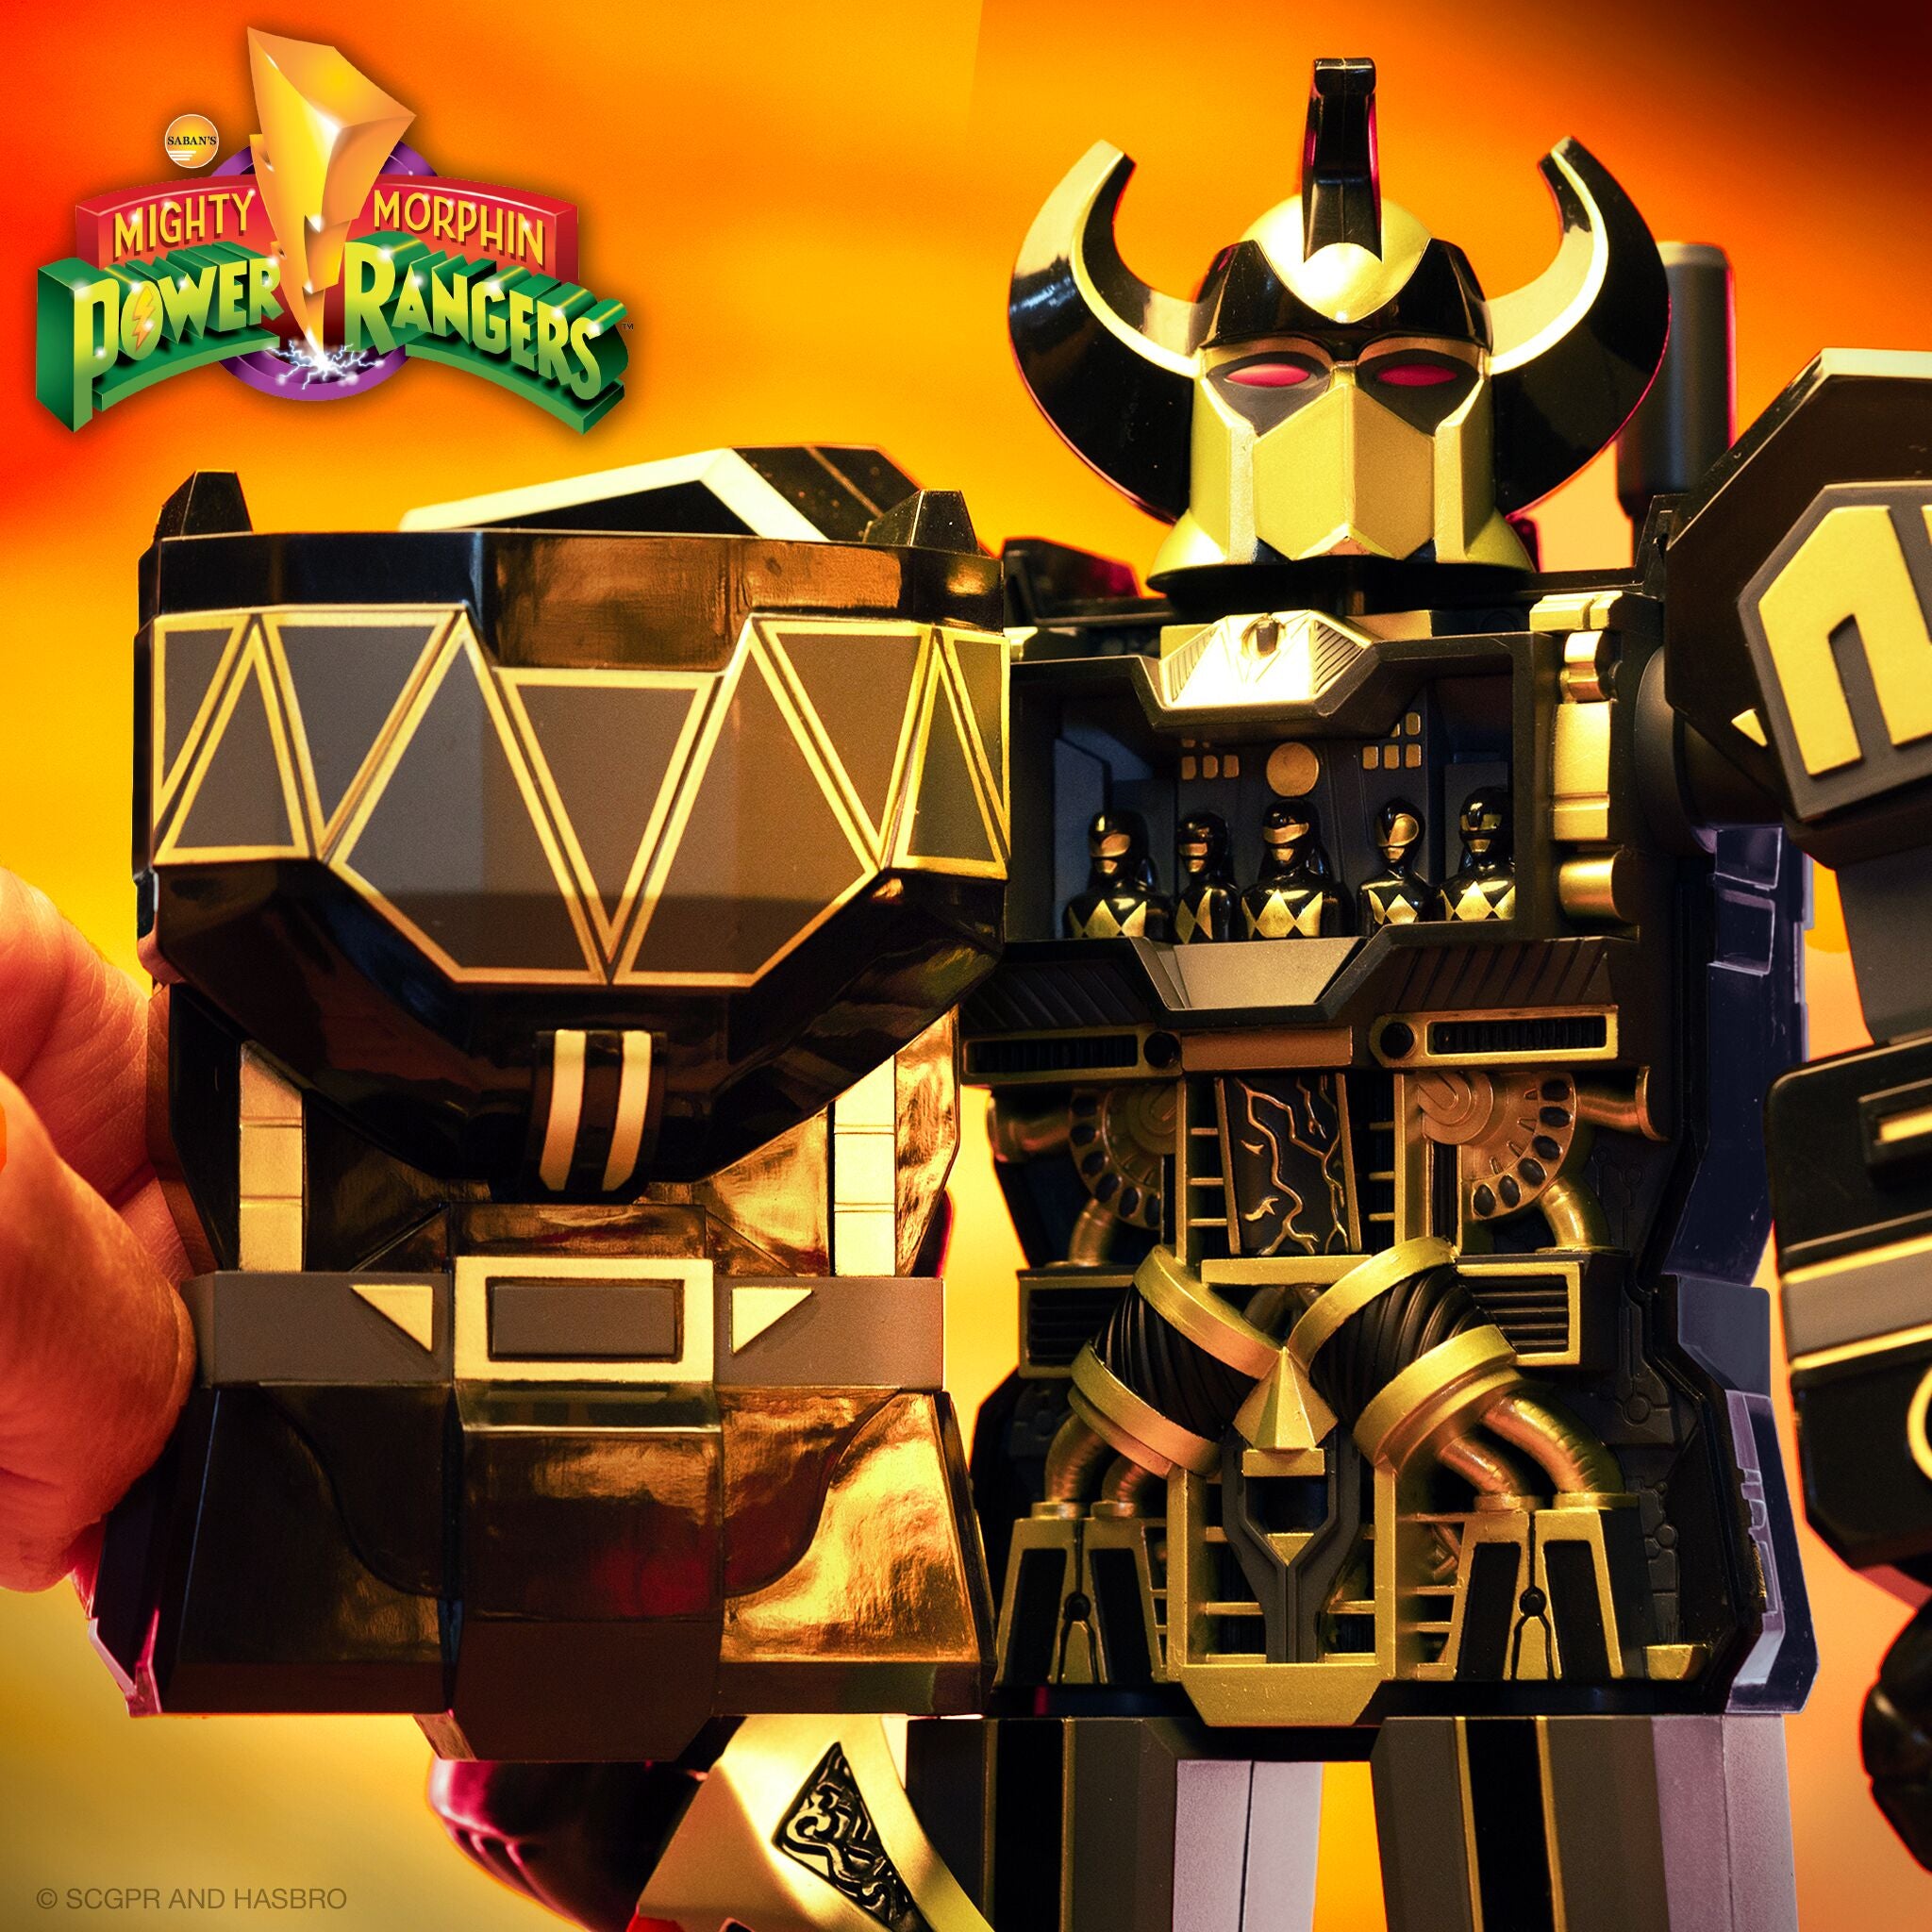 Mighty Morphin Power Rangers Super Cyborg - Megazord (Black / Gold)